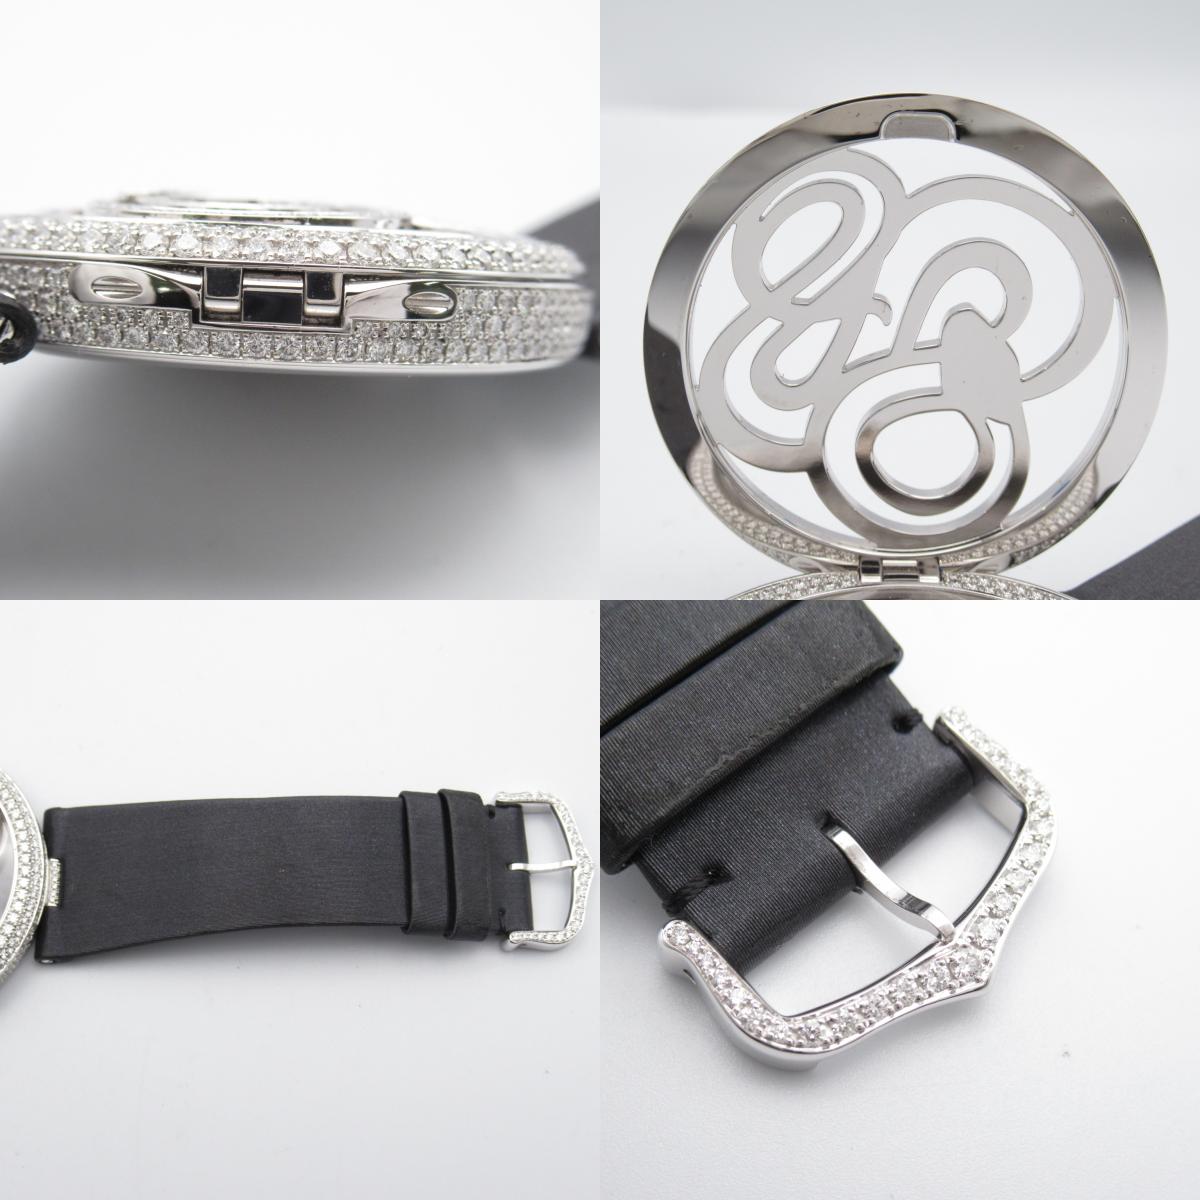 Cartier Cartier Animale du Cartier Limited (05/40) Watch Watch K18WG (White G)  Leather Belt HPI00339 Black